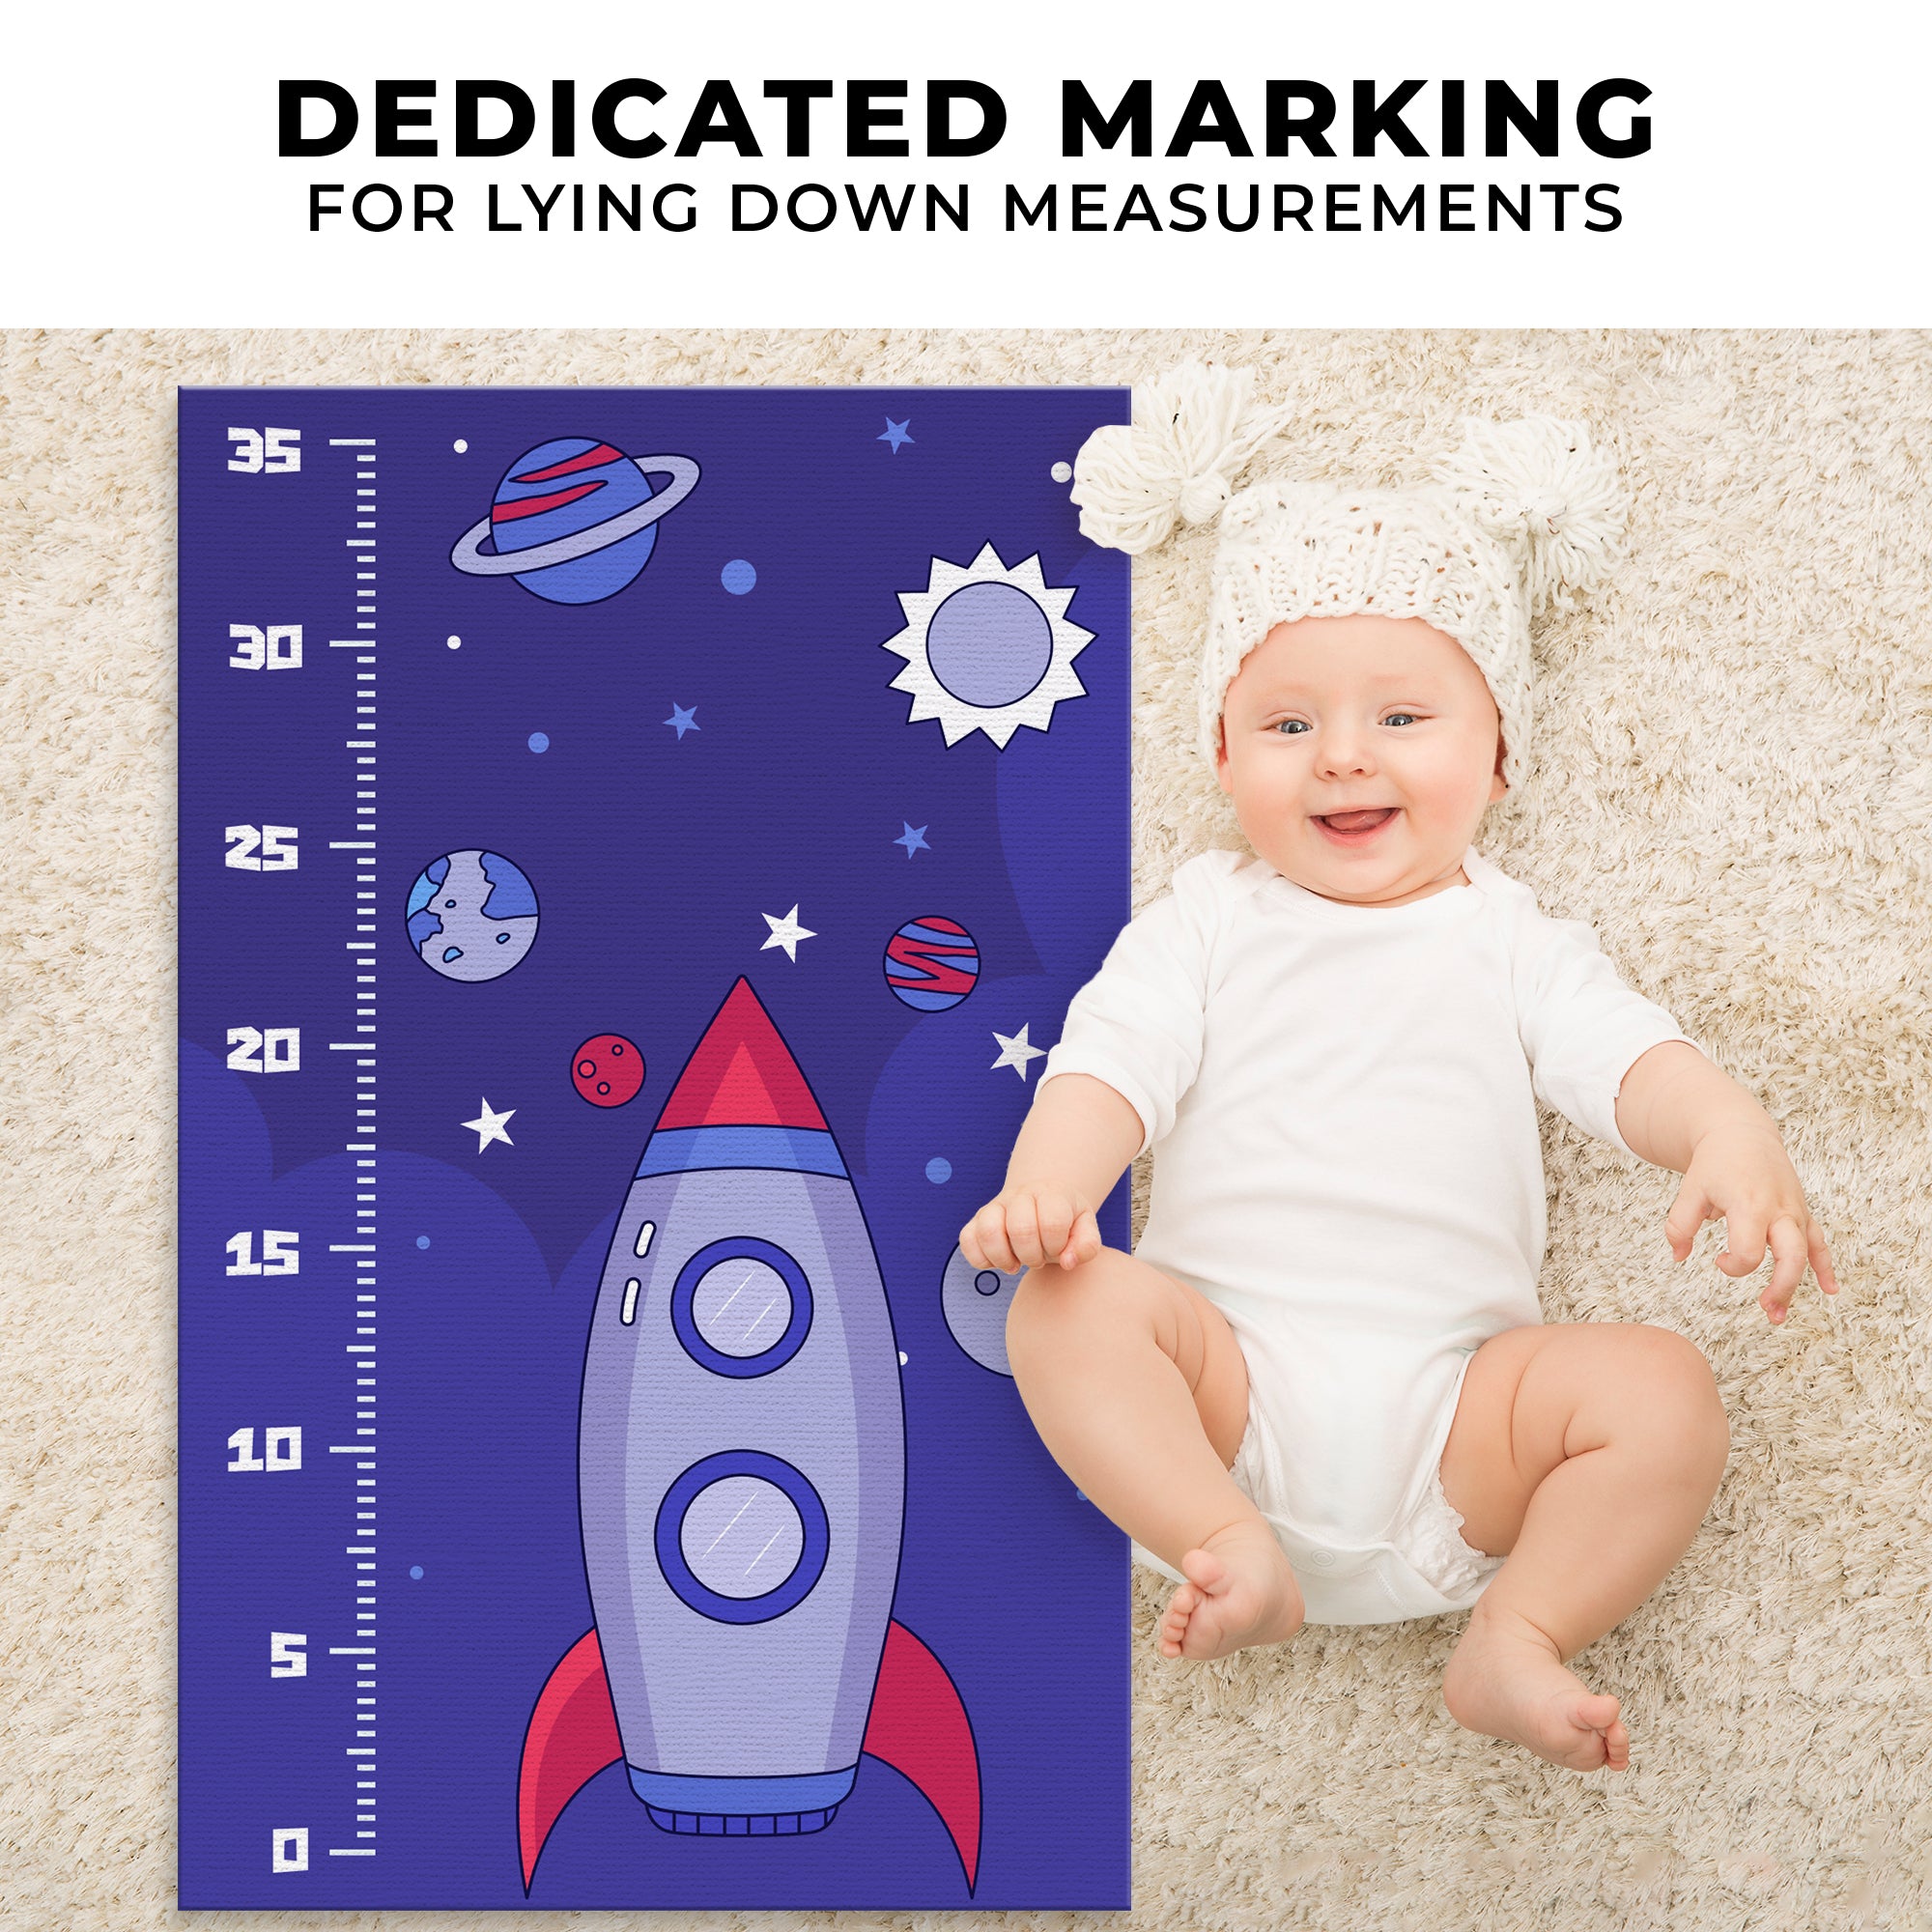 Rocket Kid Infant Growth Chart